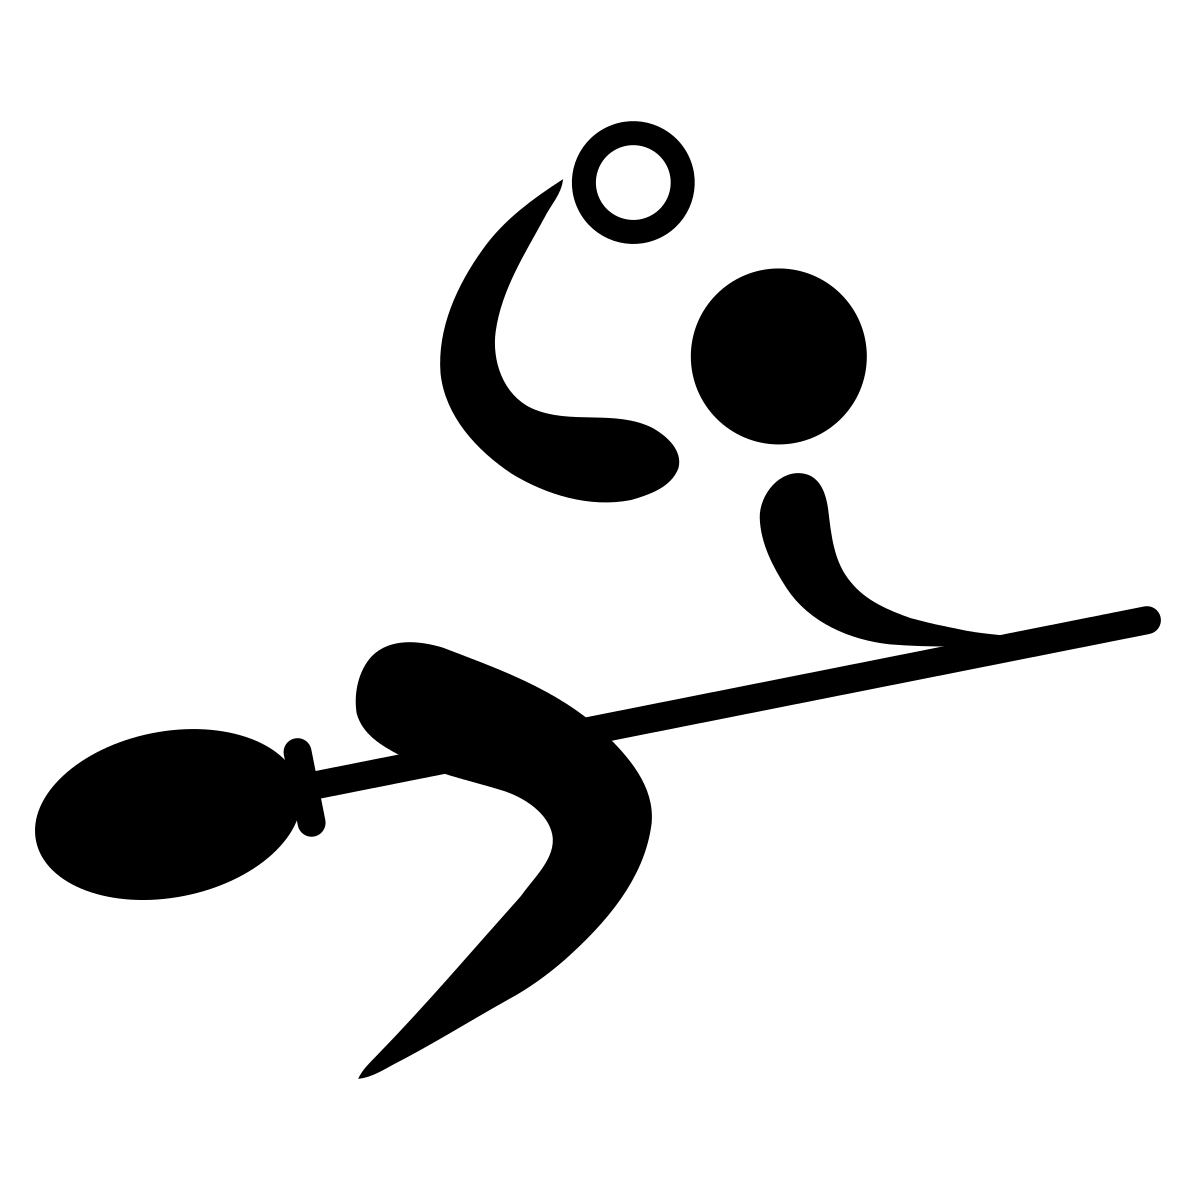 Download Fil:Quidditch pictogram.svg - Wikipedia